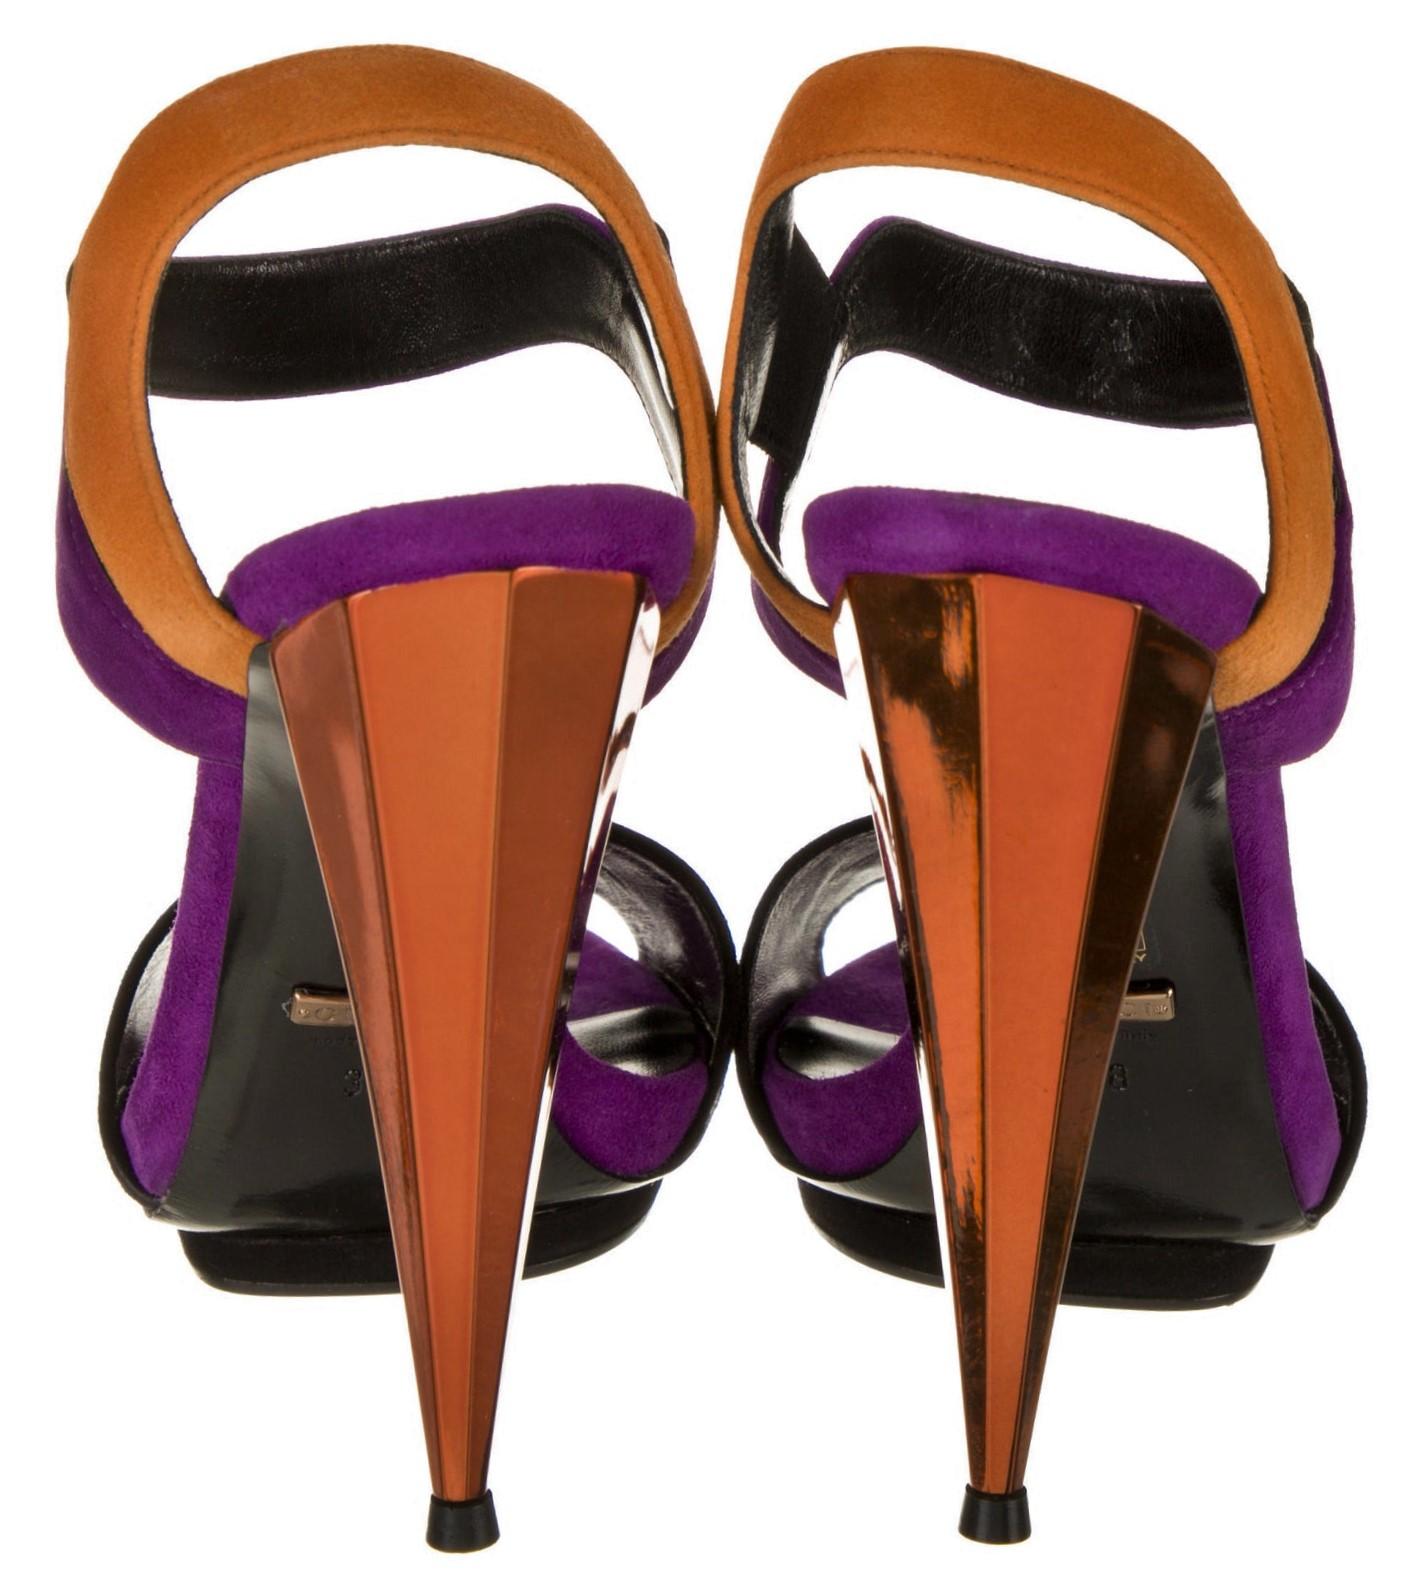 New Gucci Ad Runway 2014 Purple Orange Suede Mirrored Pump Heels Sz 38 In New Condition For Sale In Leesburg, VA